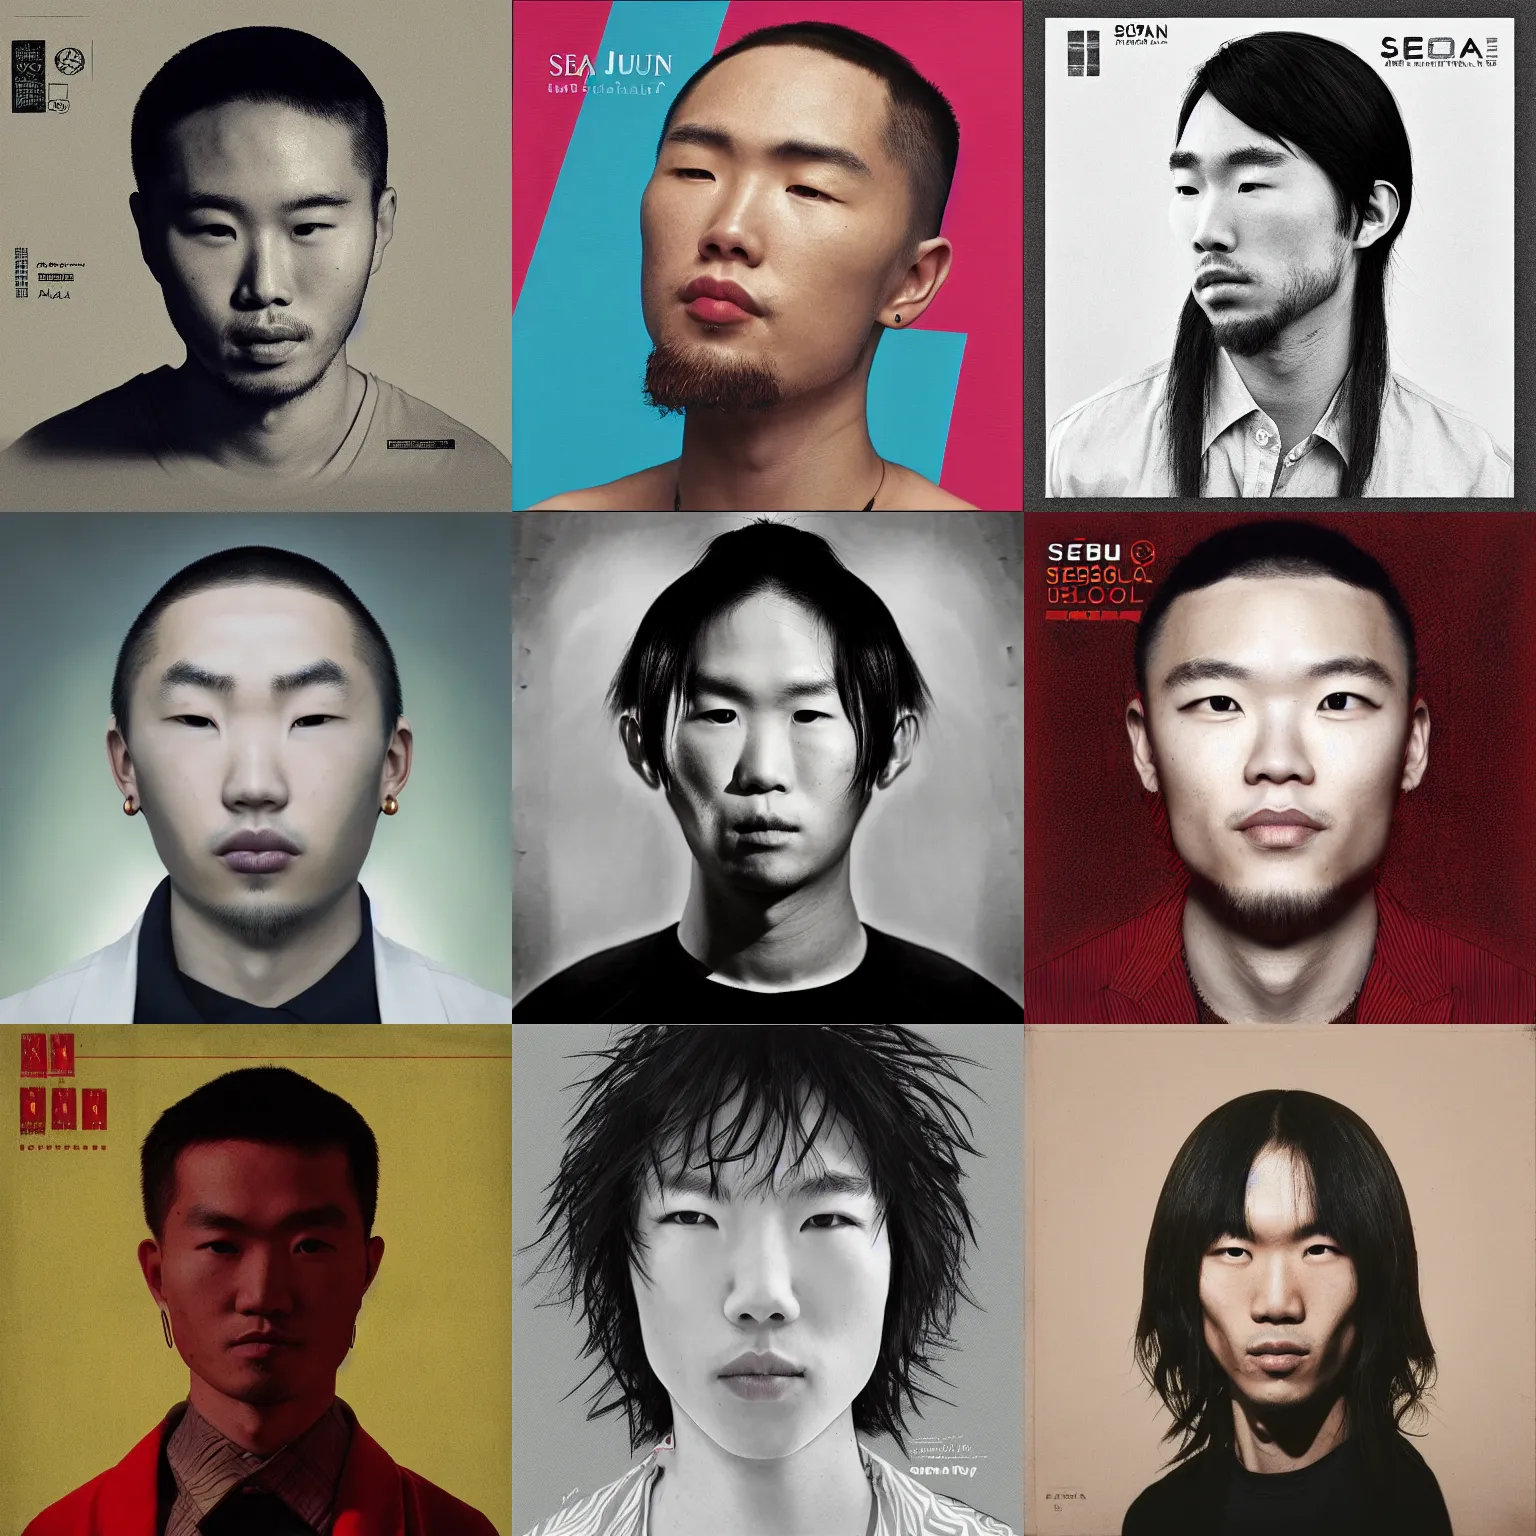 Prompt: Seba Jun portrait, Modal Soul album cover